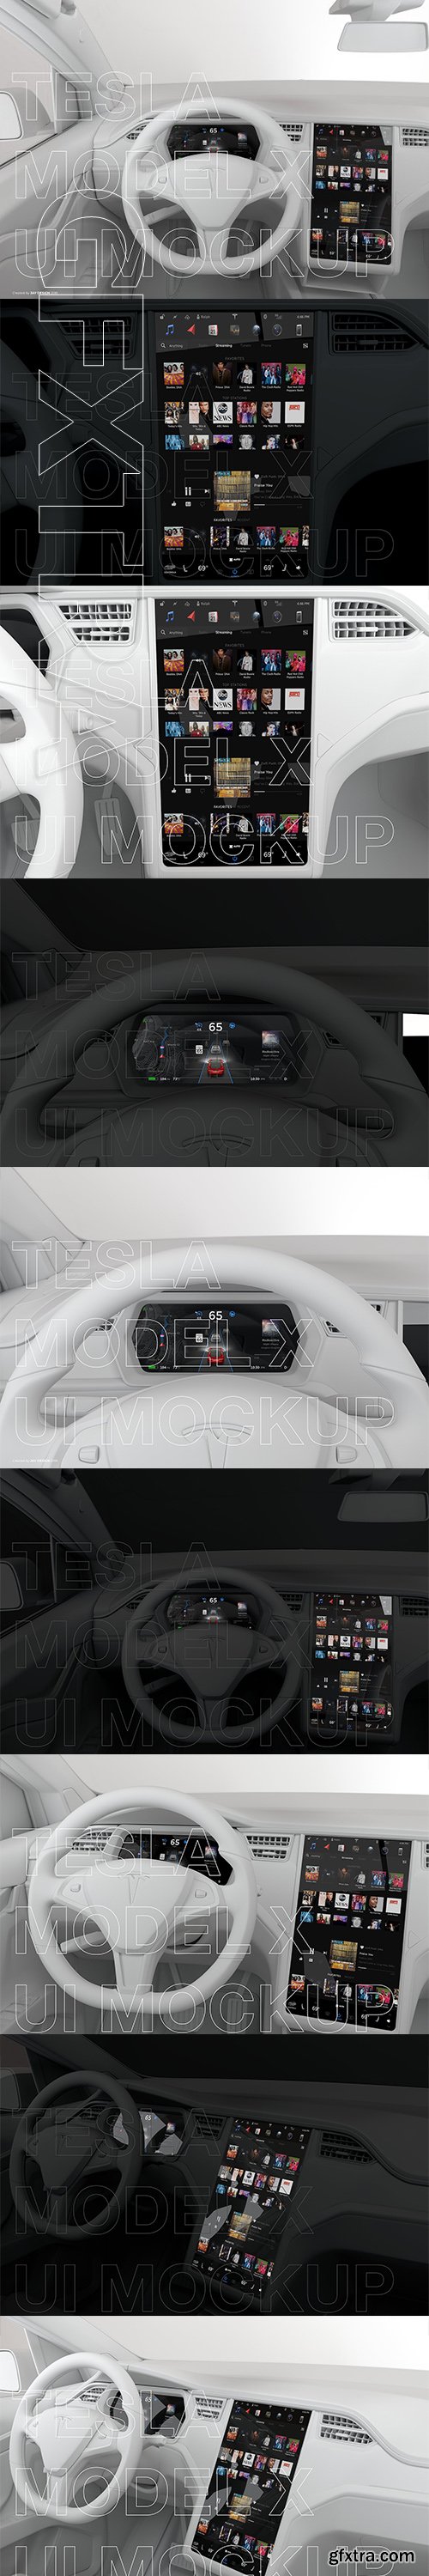 CreativeMarket - Tesla Model X Display UI mockup 2824025